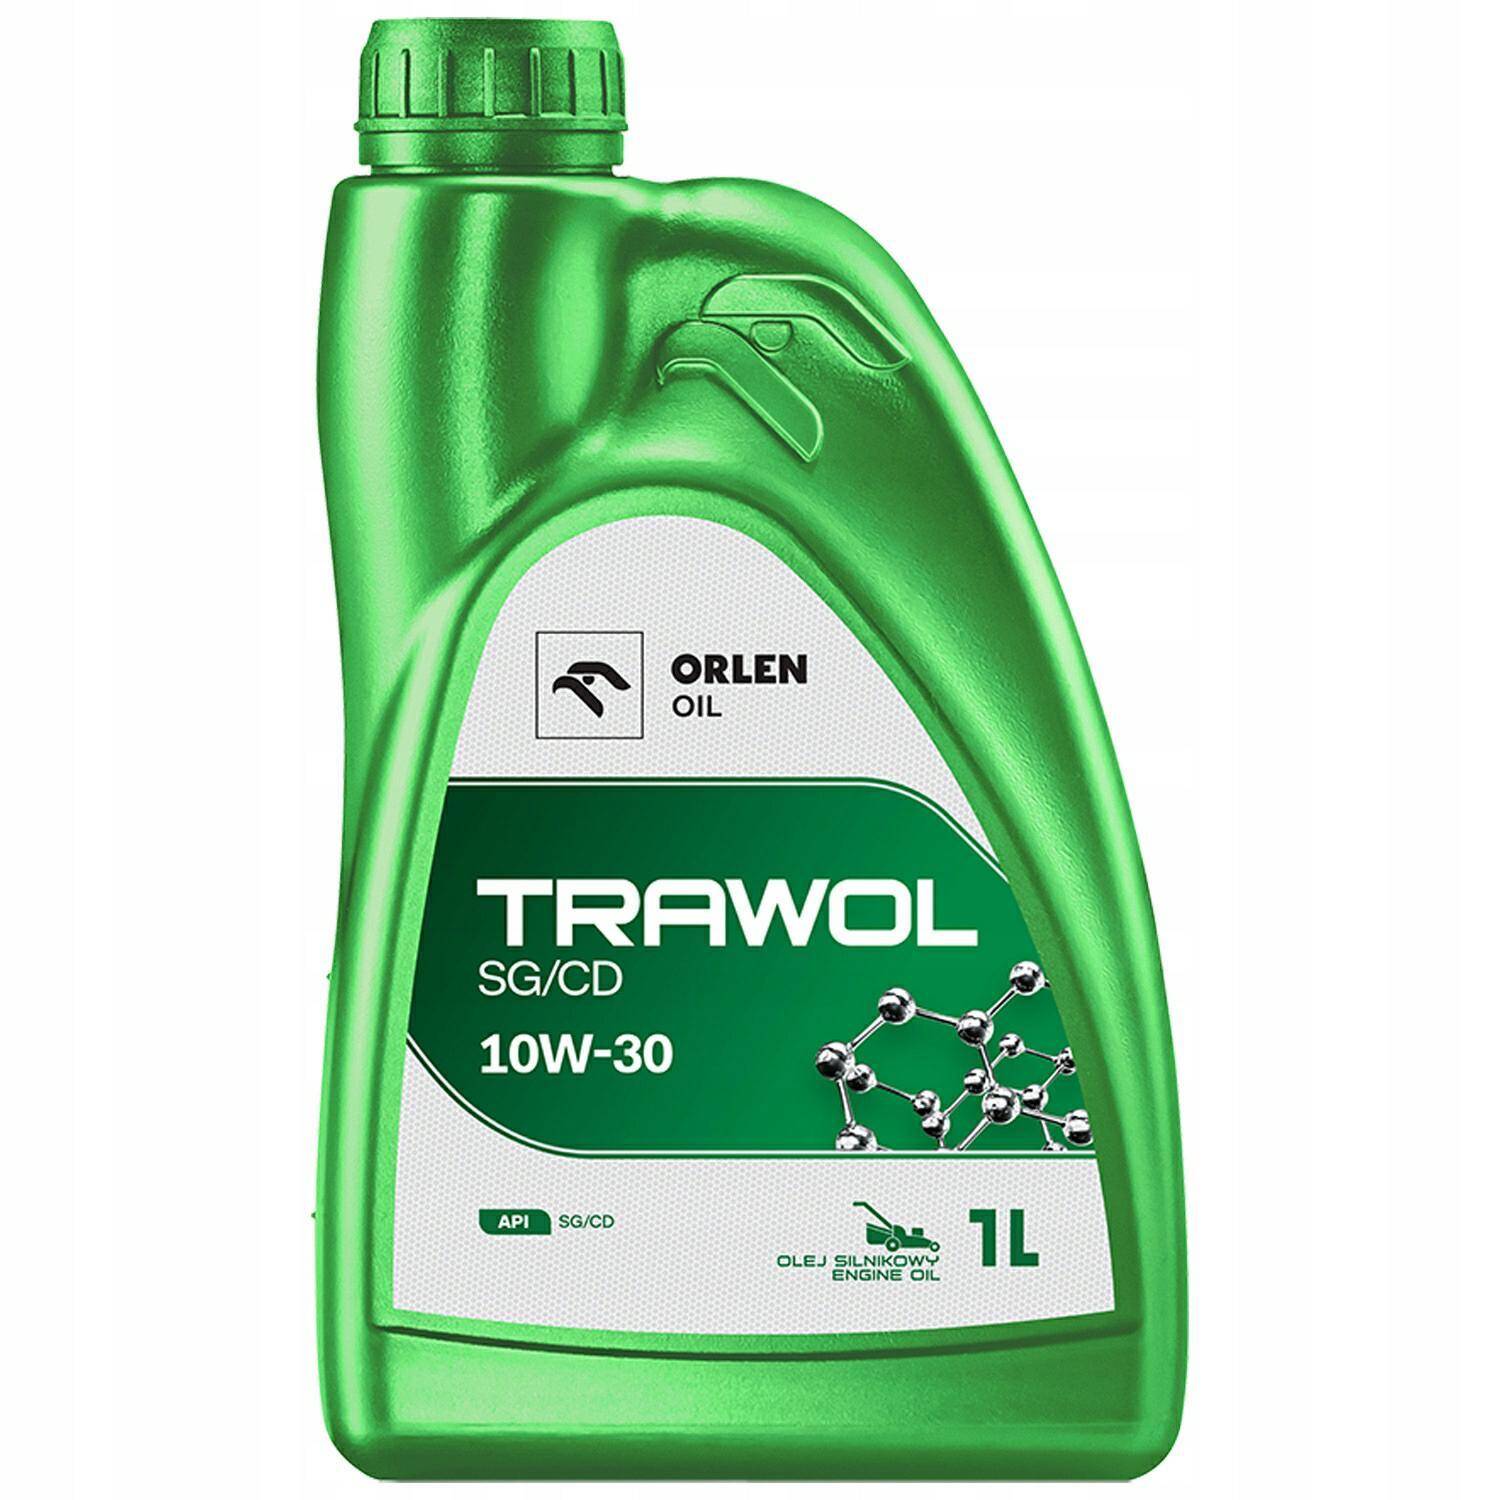 Trawol SG/CD 10W-30 1L